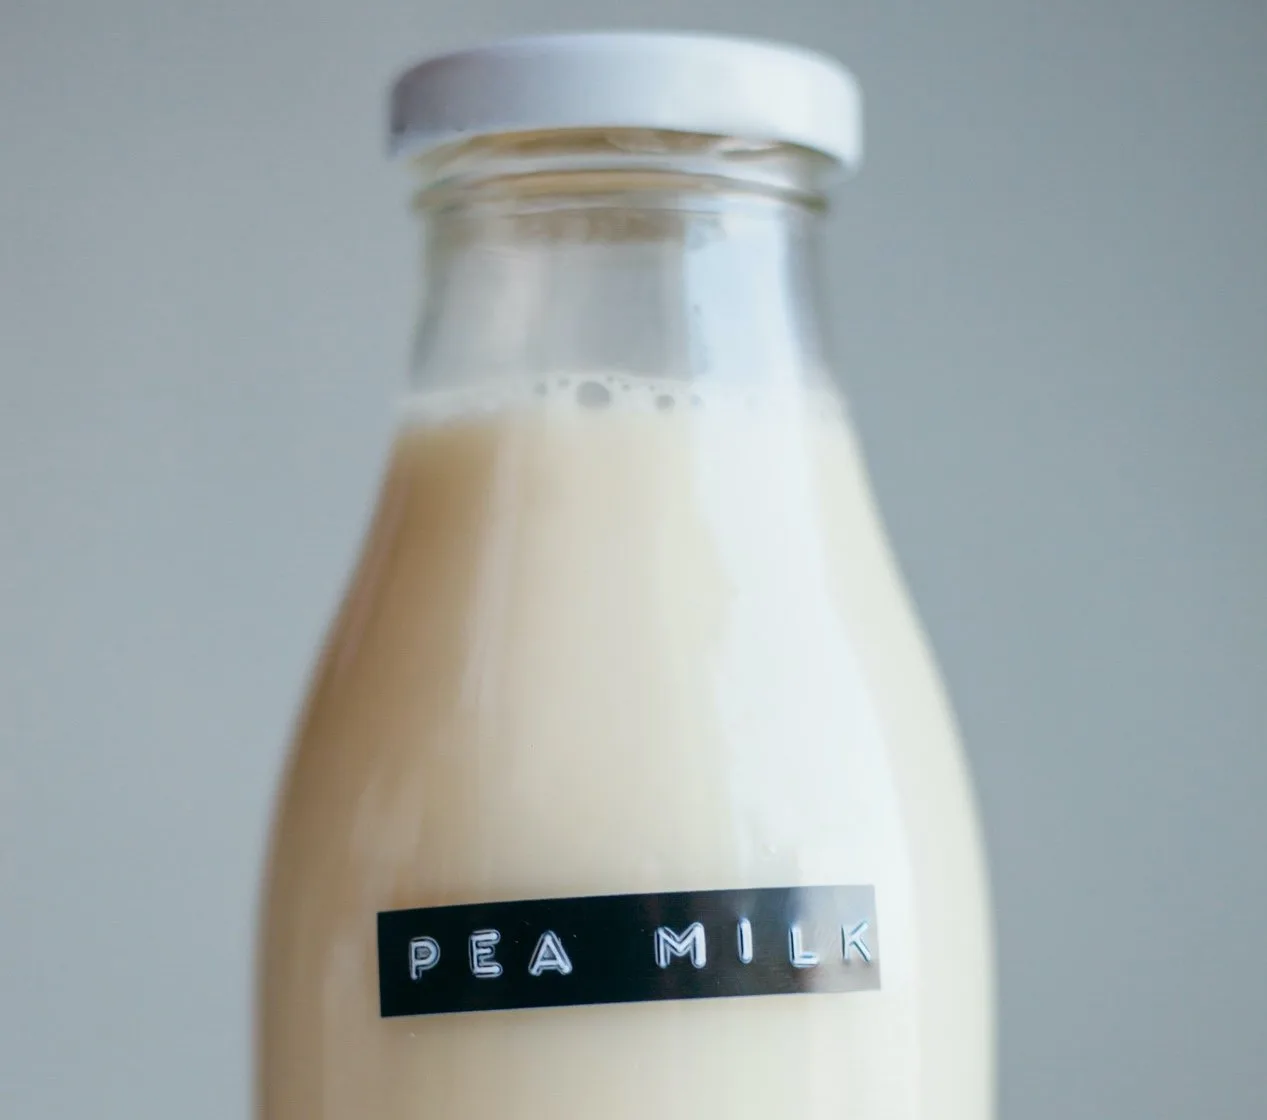 Plant-Based Milk Has A New Contender: Meet Pea Milk